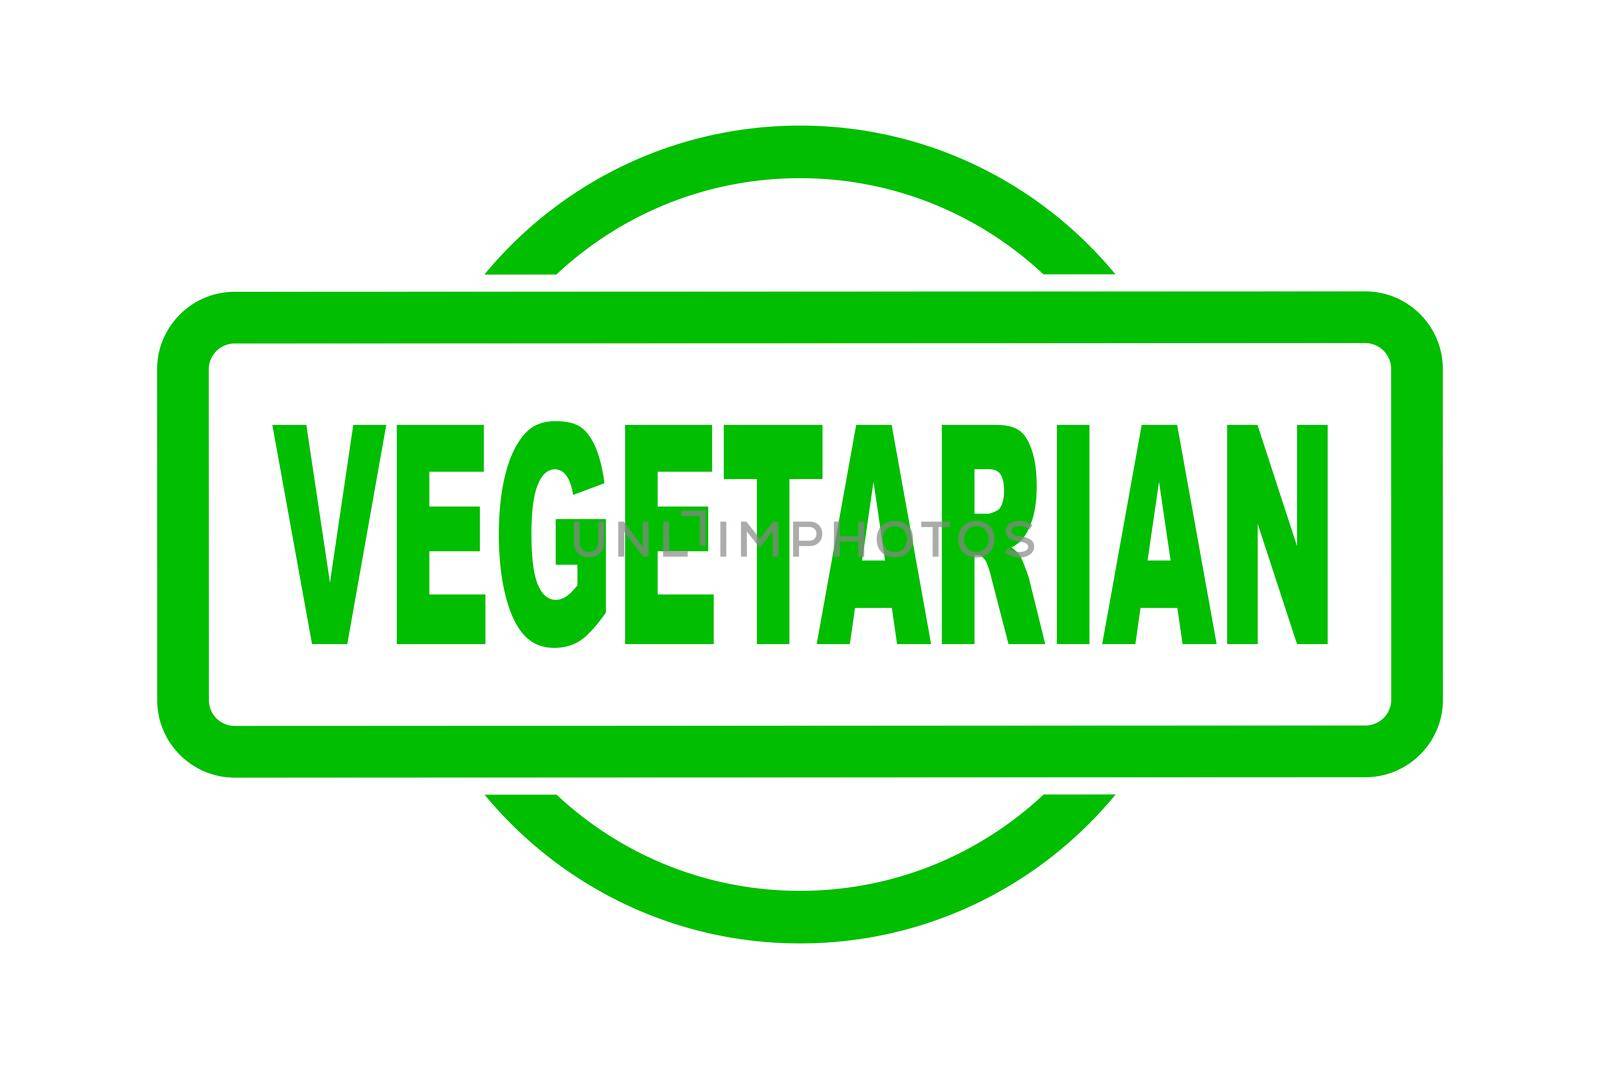 Vegetarian Green Rubber Stamp by Bigalbaloo